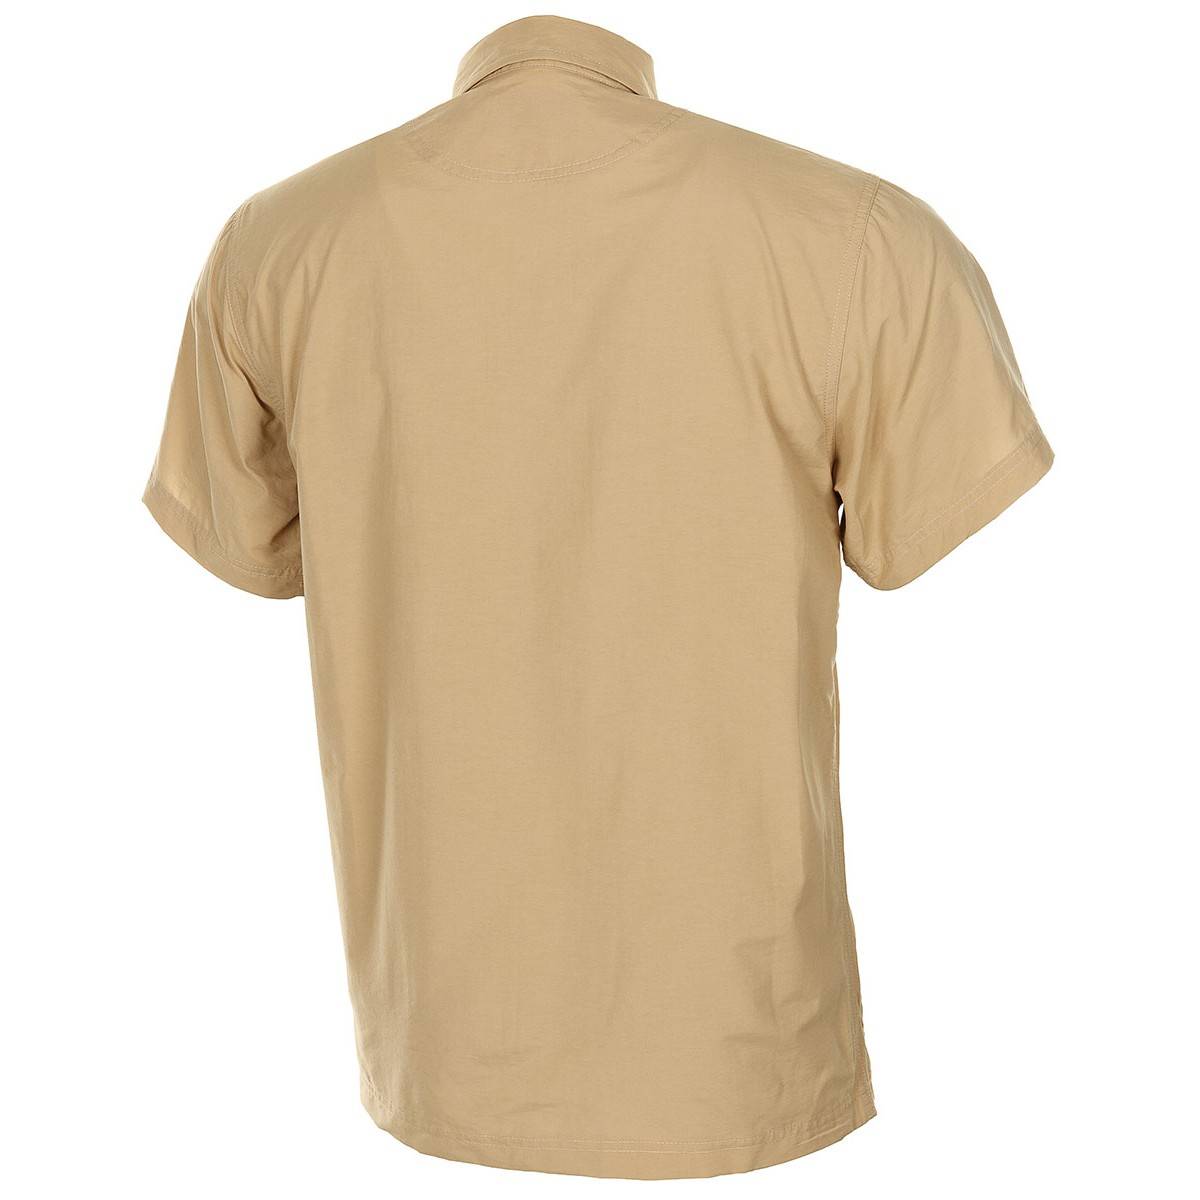 Outdoor Shirt, short sleeves, Khaki | Apparel \ Shirts militarysurplus ...